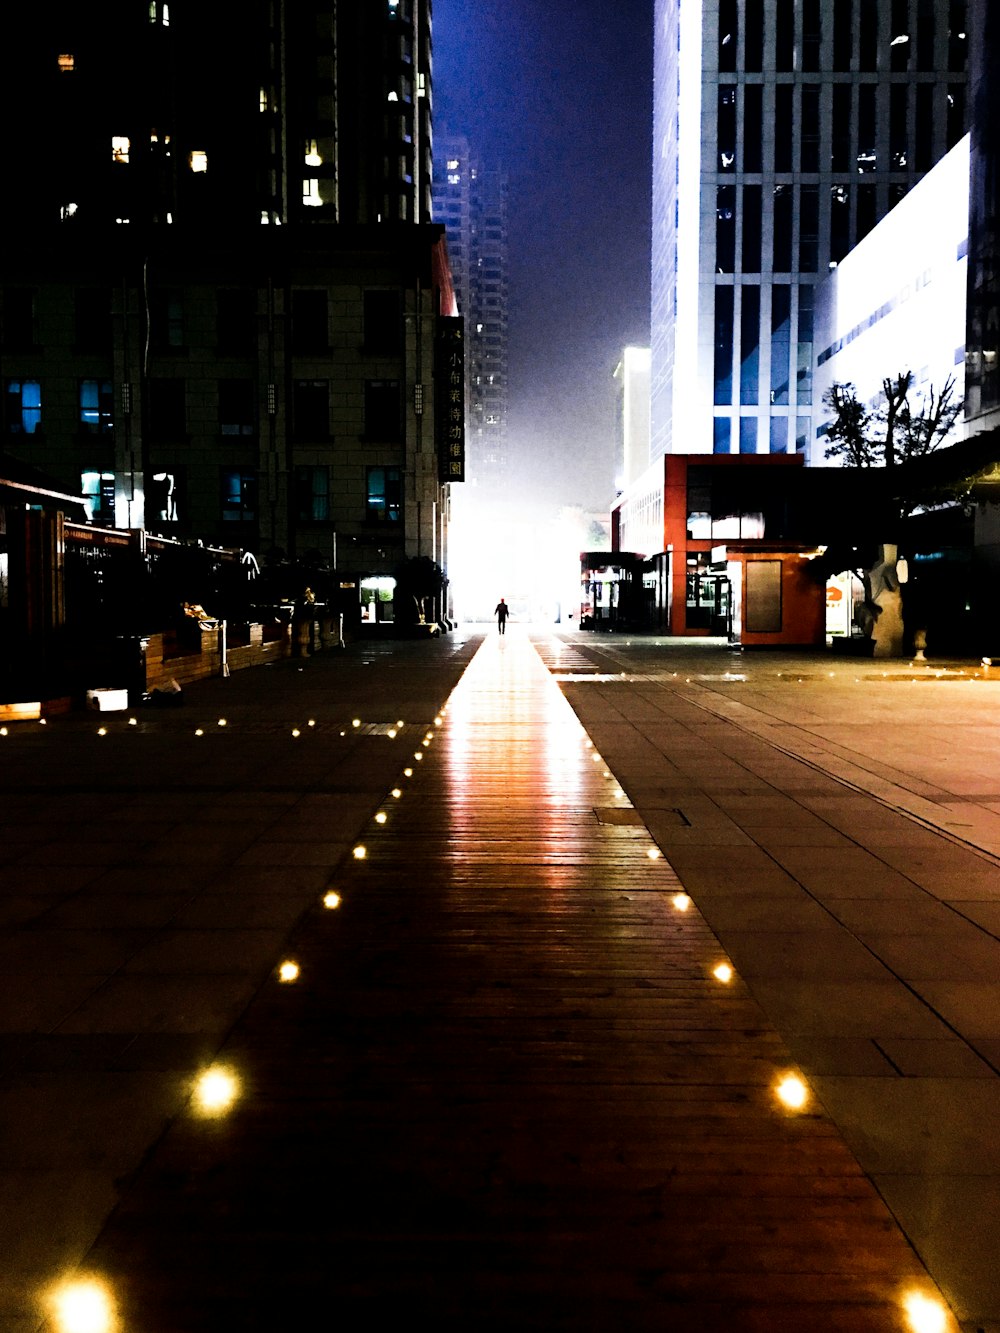 urban photo of a city street